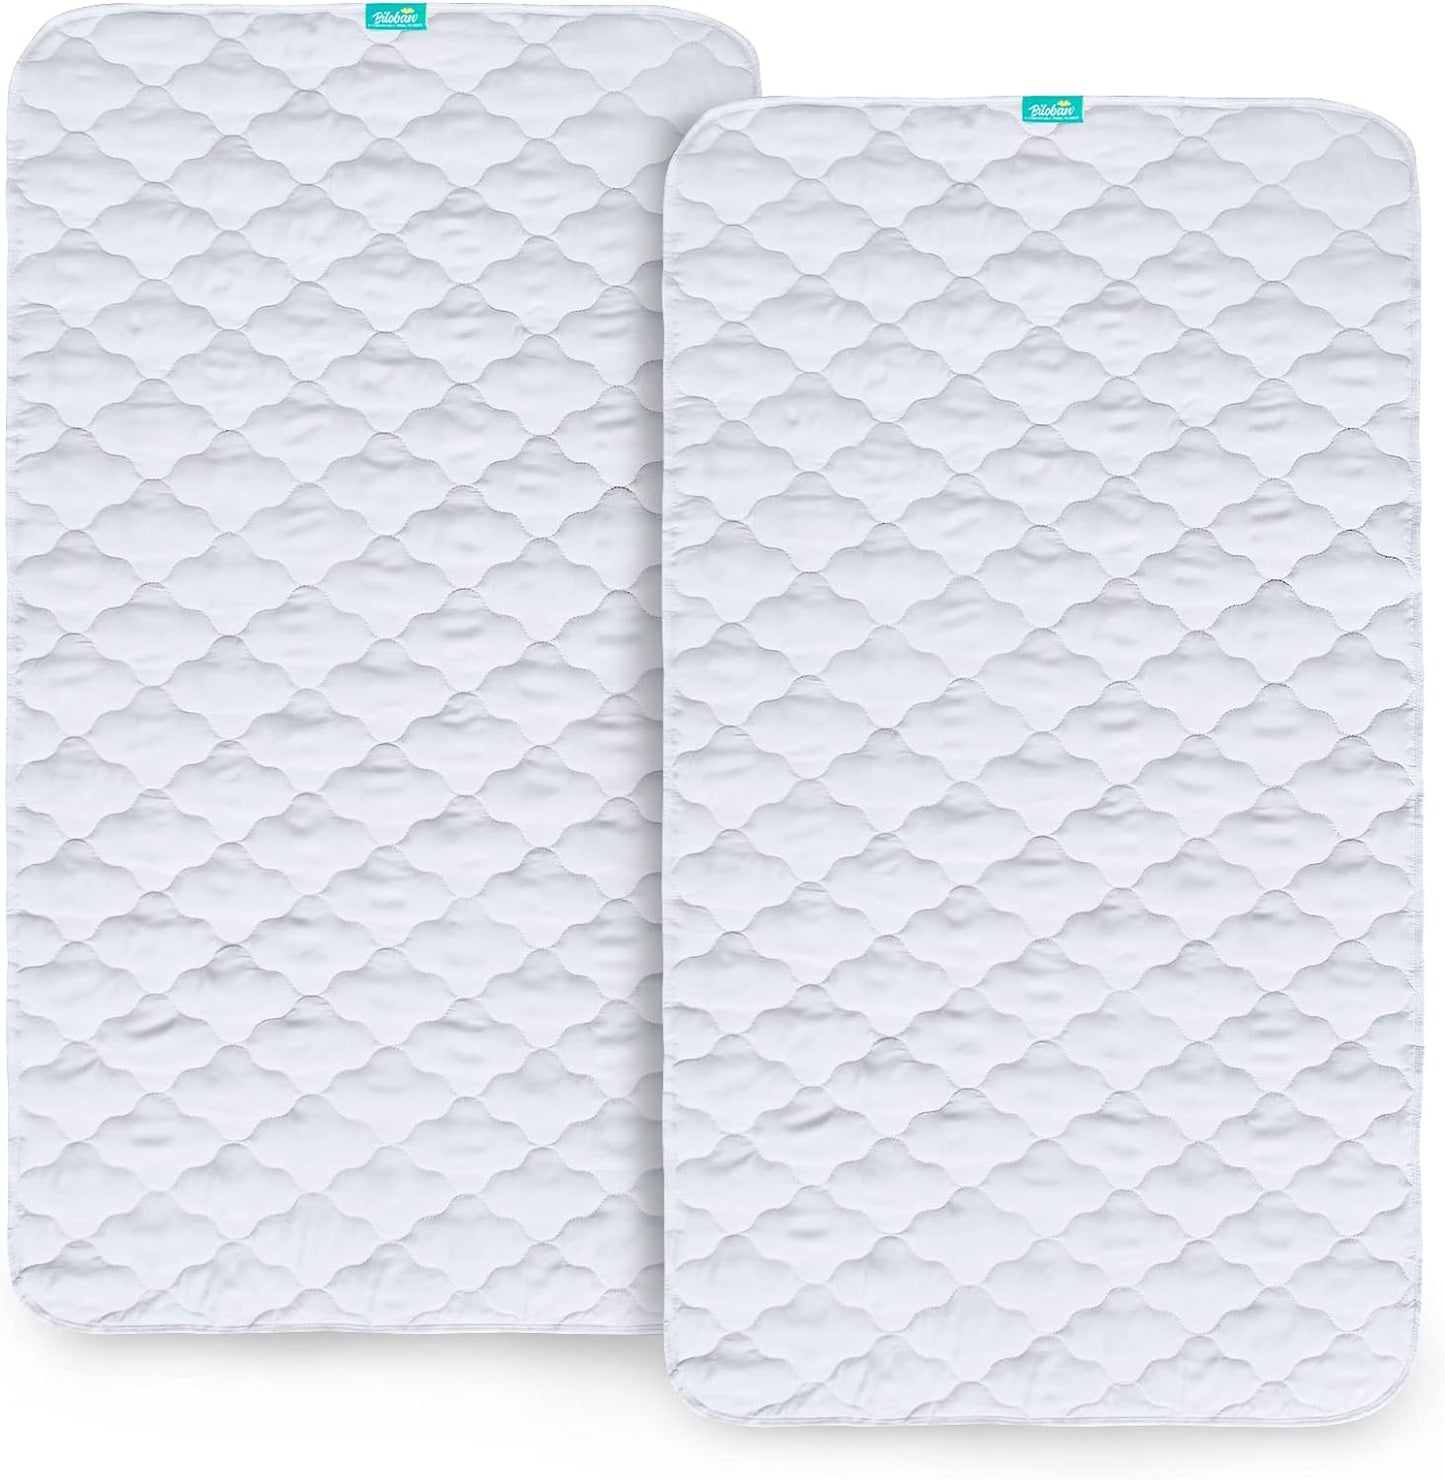 Waterproof Crib Mattress Protector Pad | Bed Pad Mat - 52" x 28", Anti Slip & Durable, White, 2 Pack - Biloban Online Store